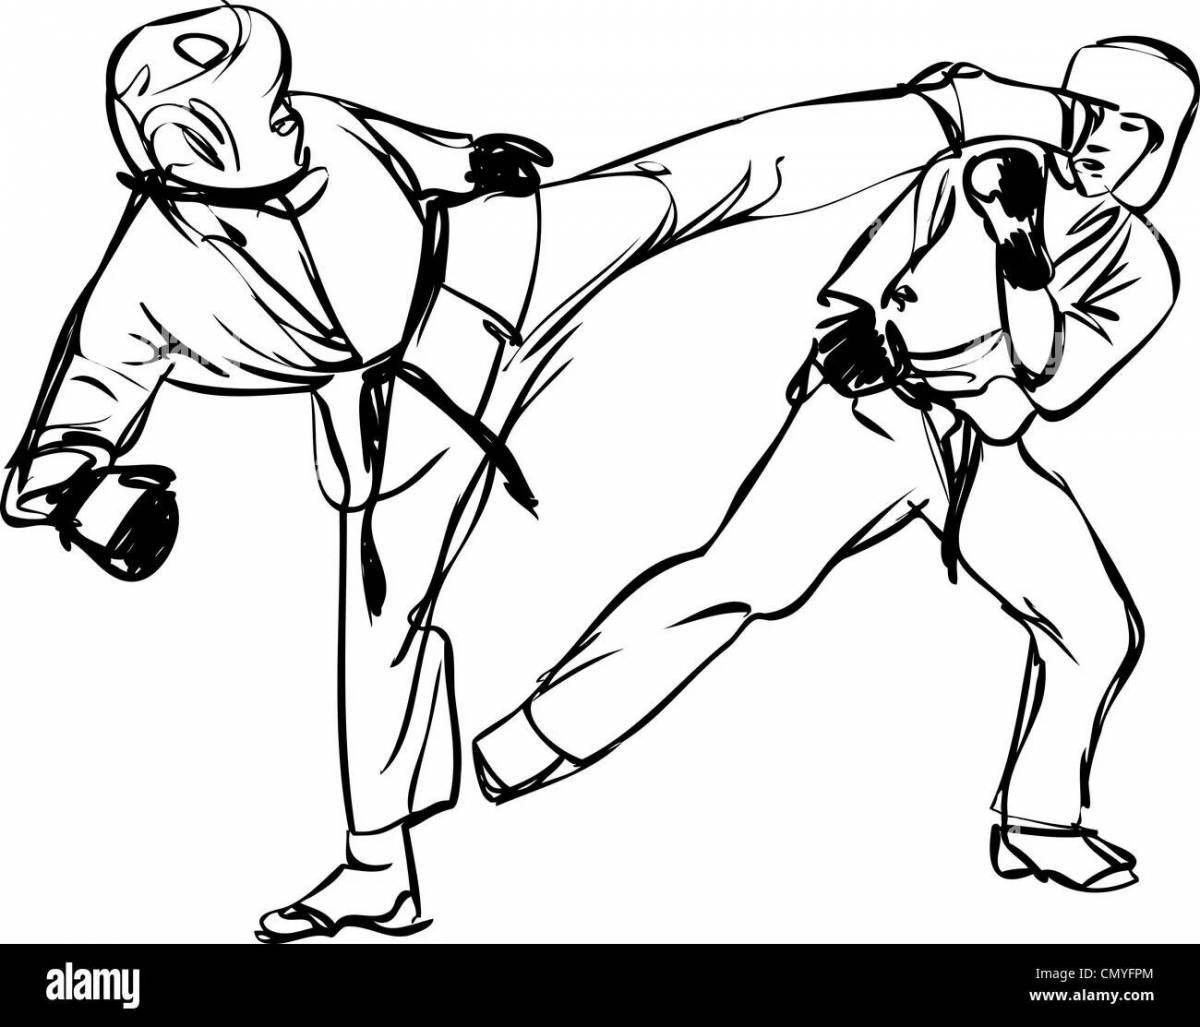 Joyful taekwondo coloring page